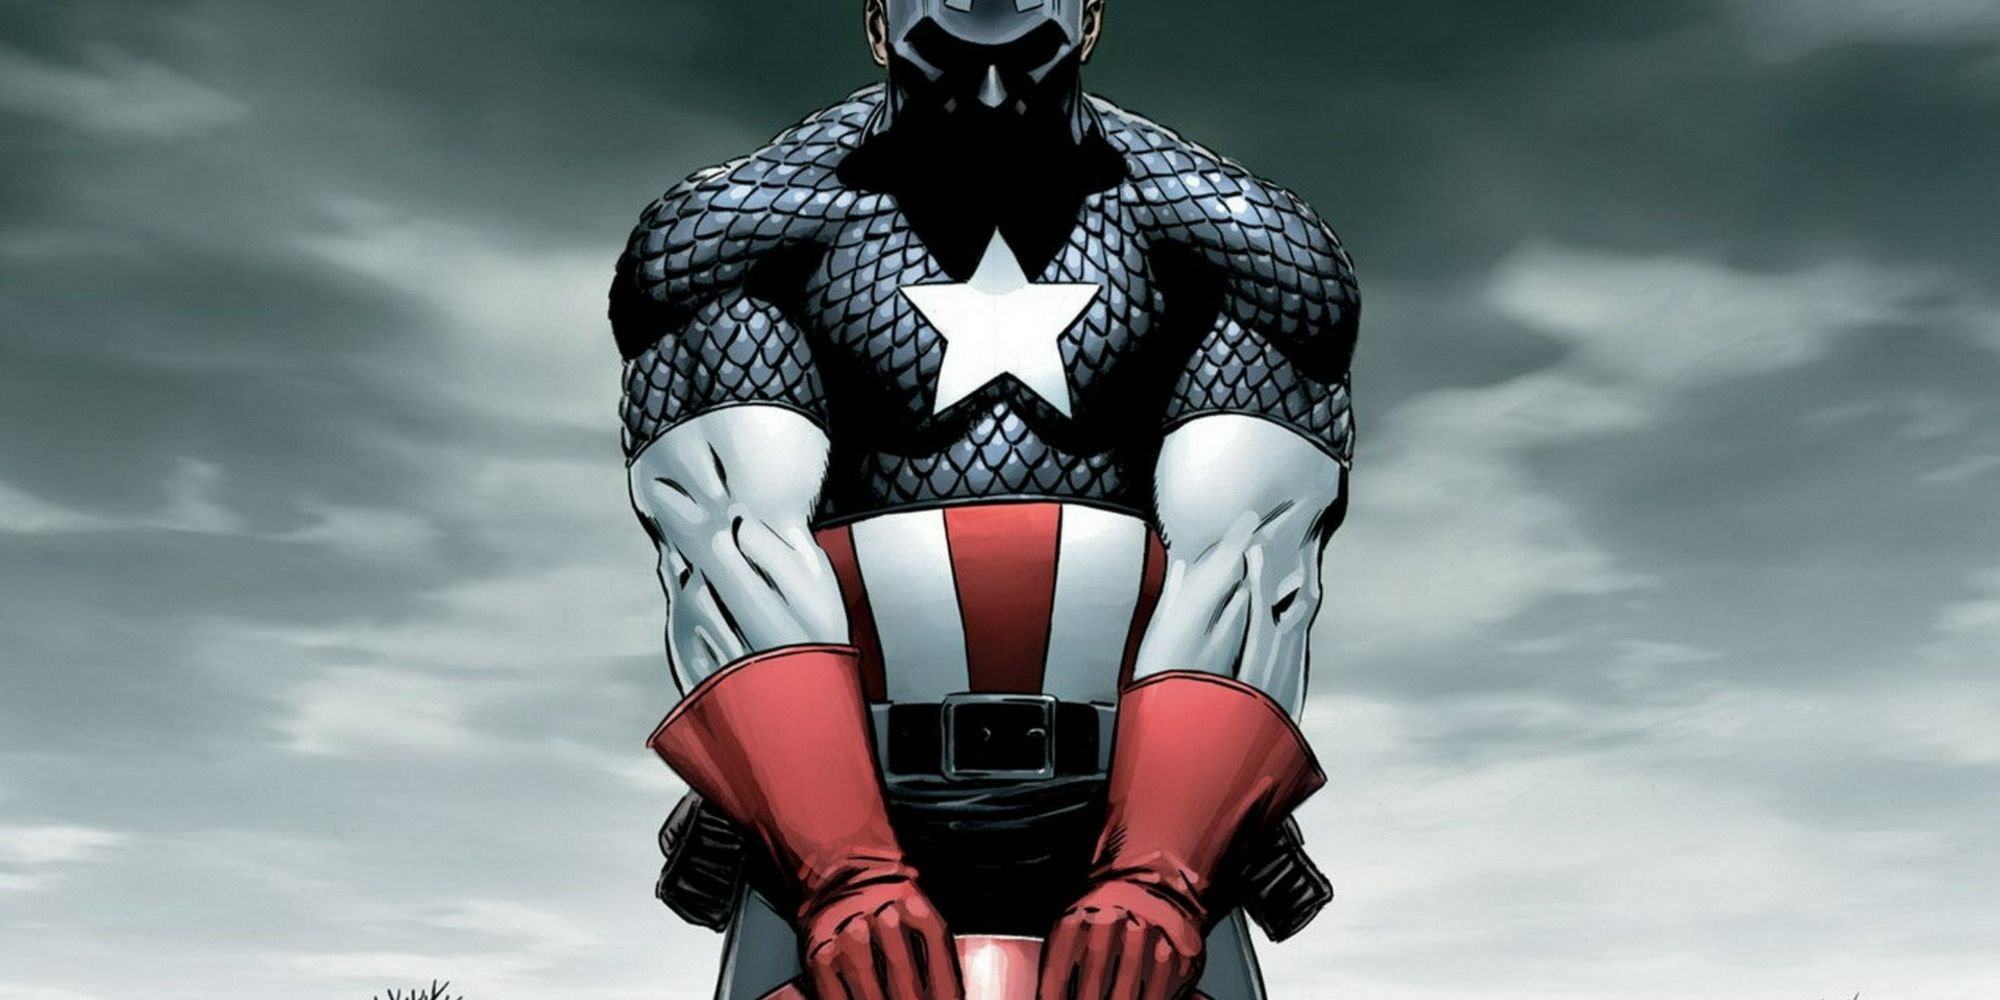 Captain America, eyes downcast, in Marvel Comics